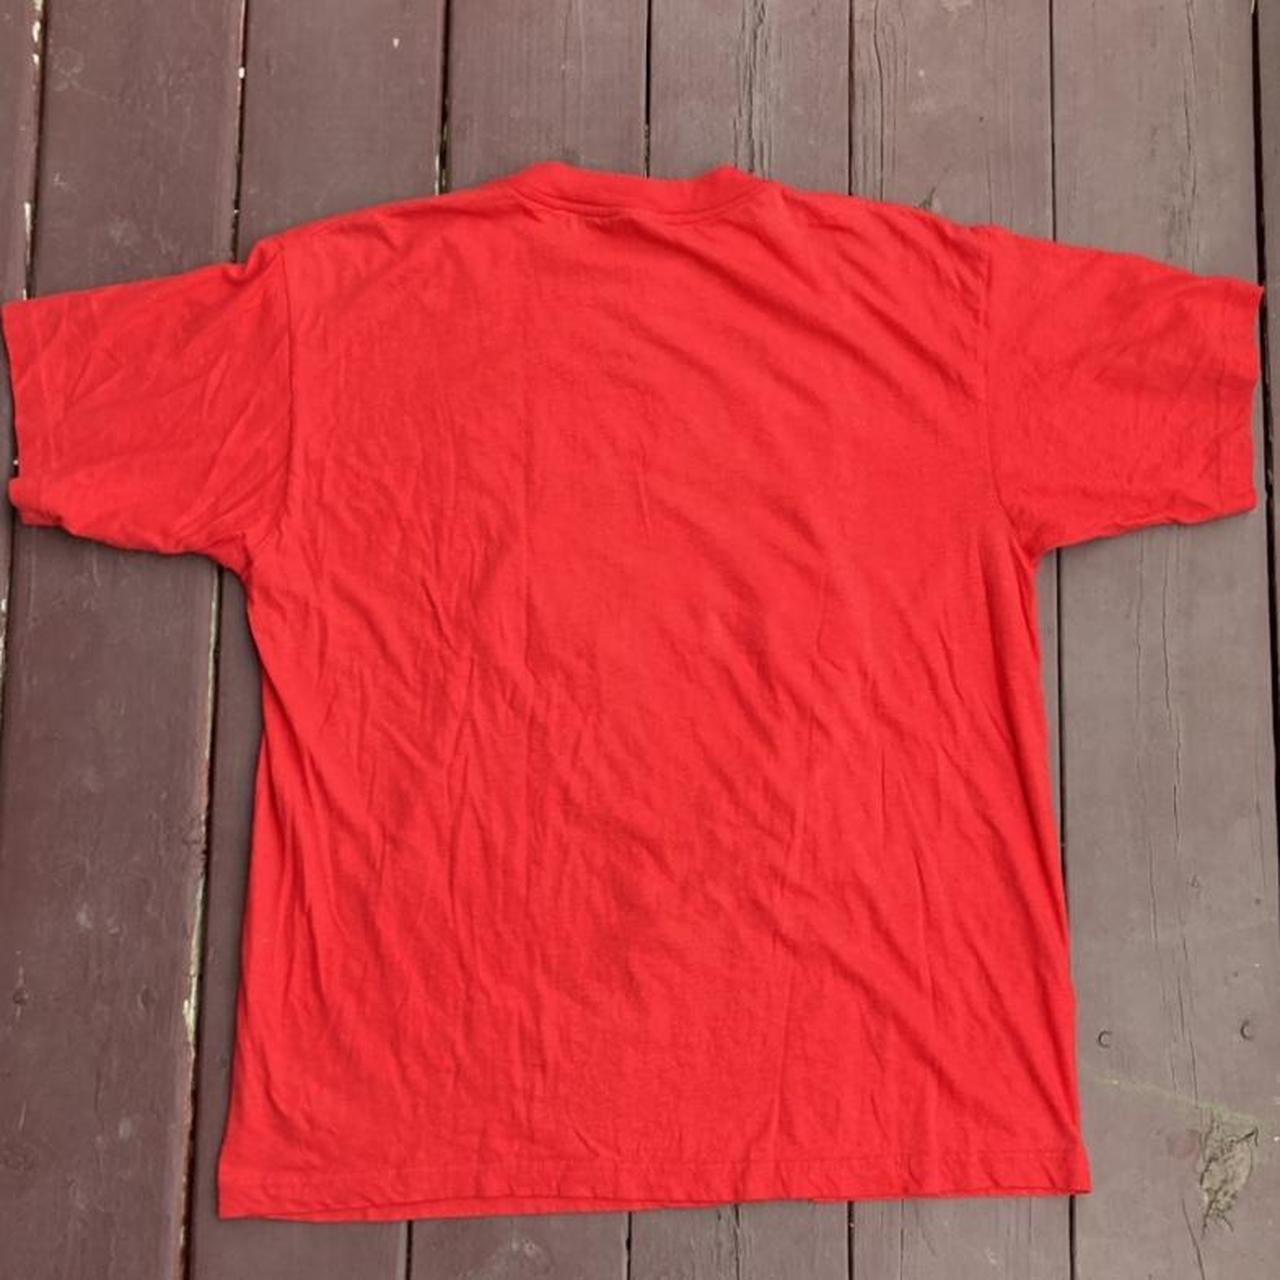 Vintage thin Polska shirt Red - Size xl but fits... - Depop